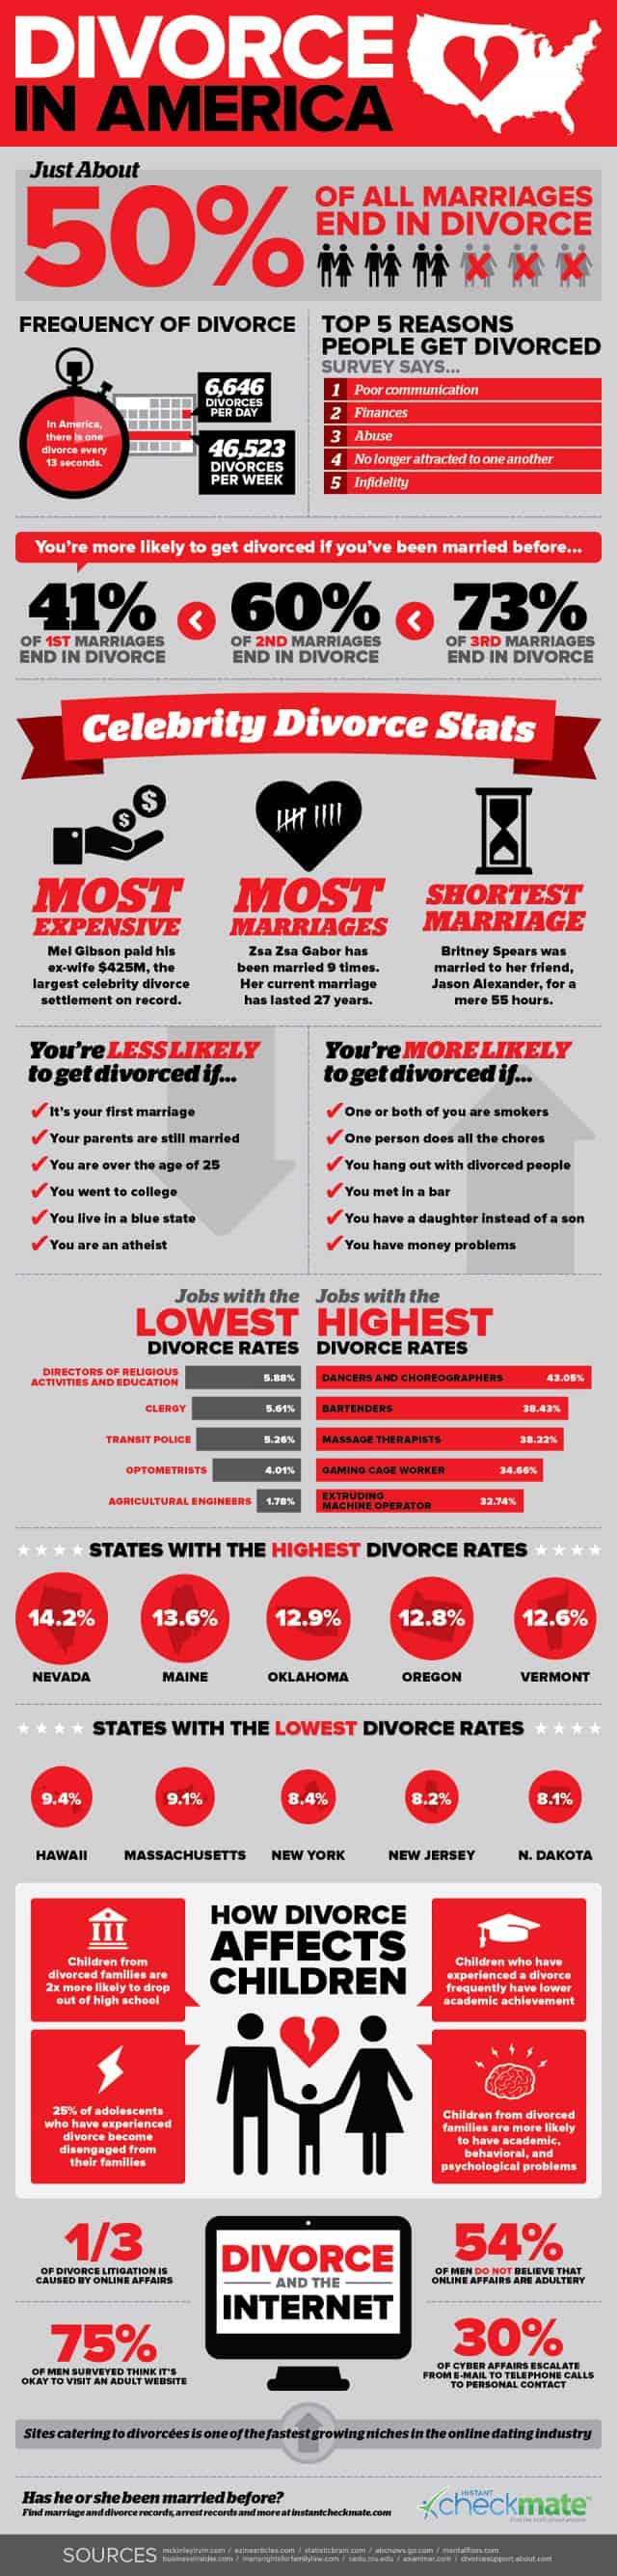 Divorce in America Infographic